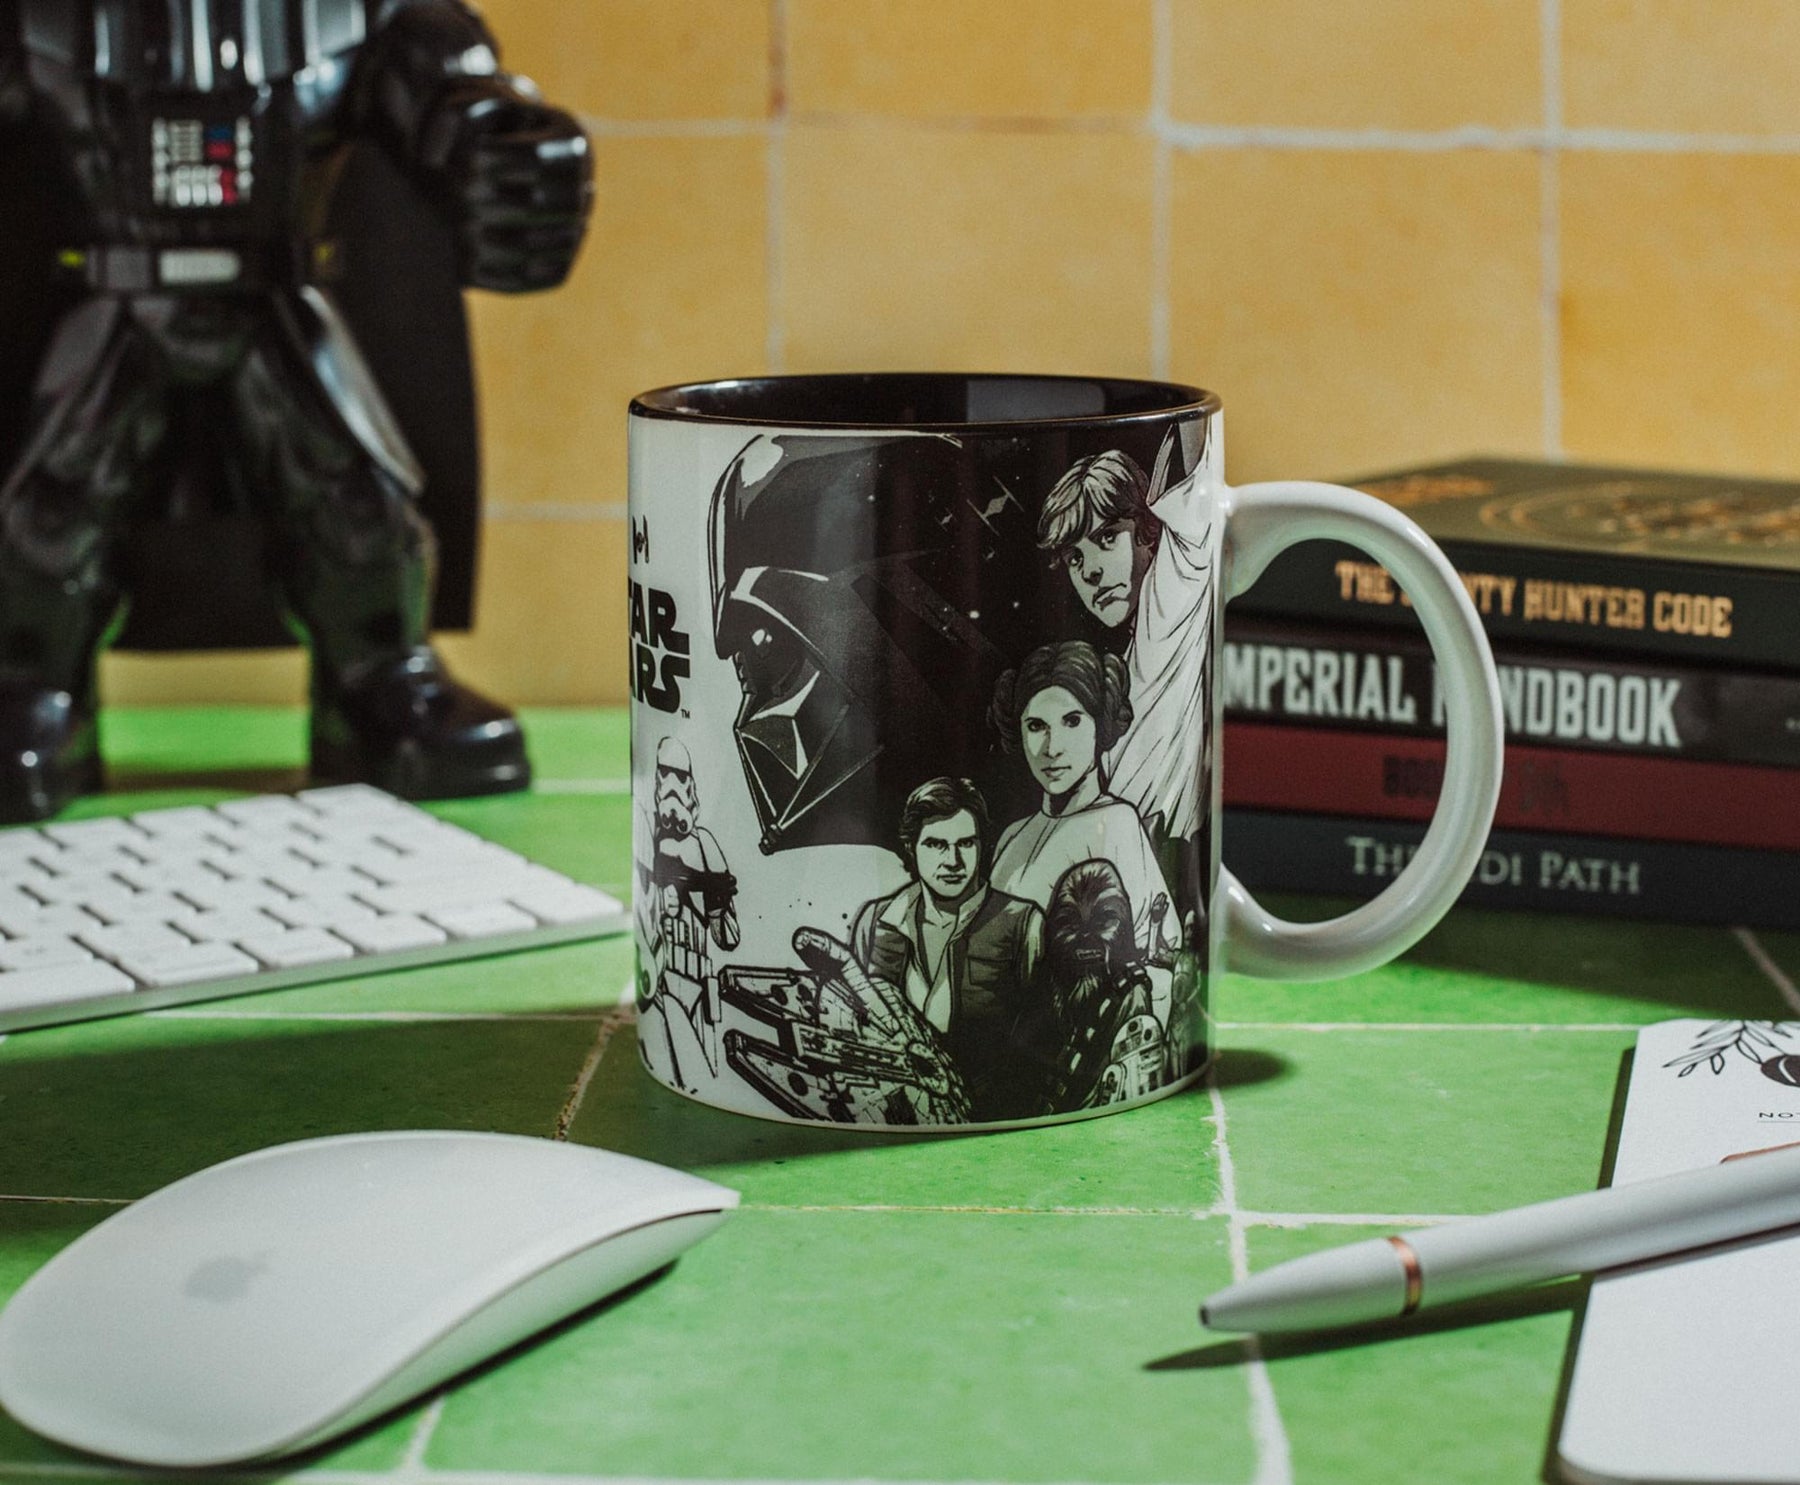 Star Wars Original Trilogy Collage Ceramic Mug | Holds 20 Ounces